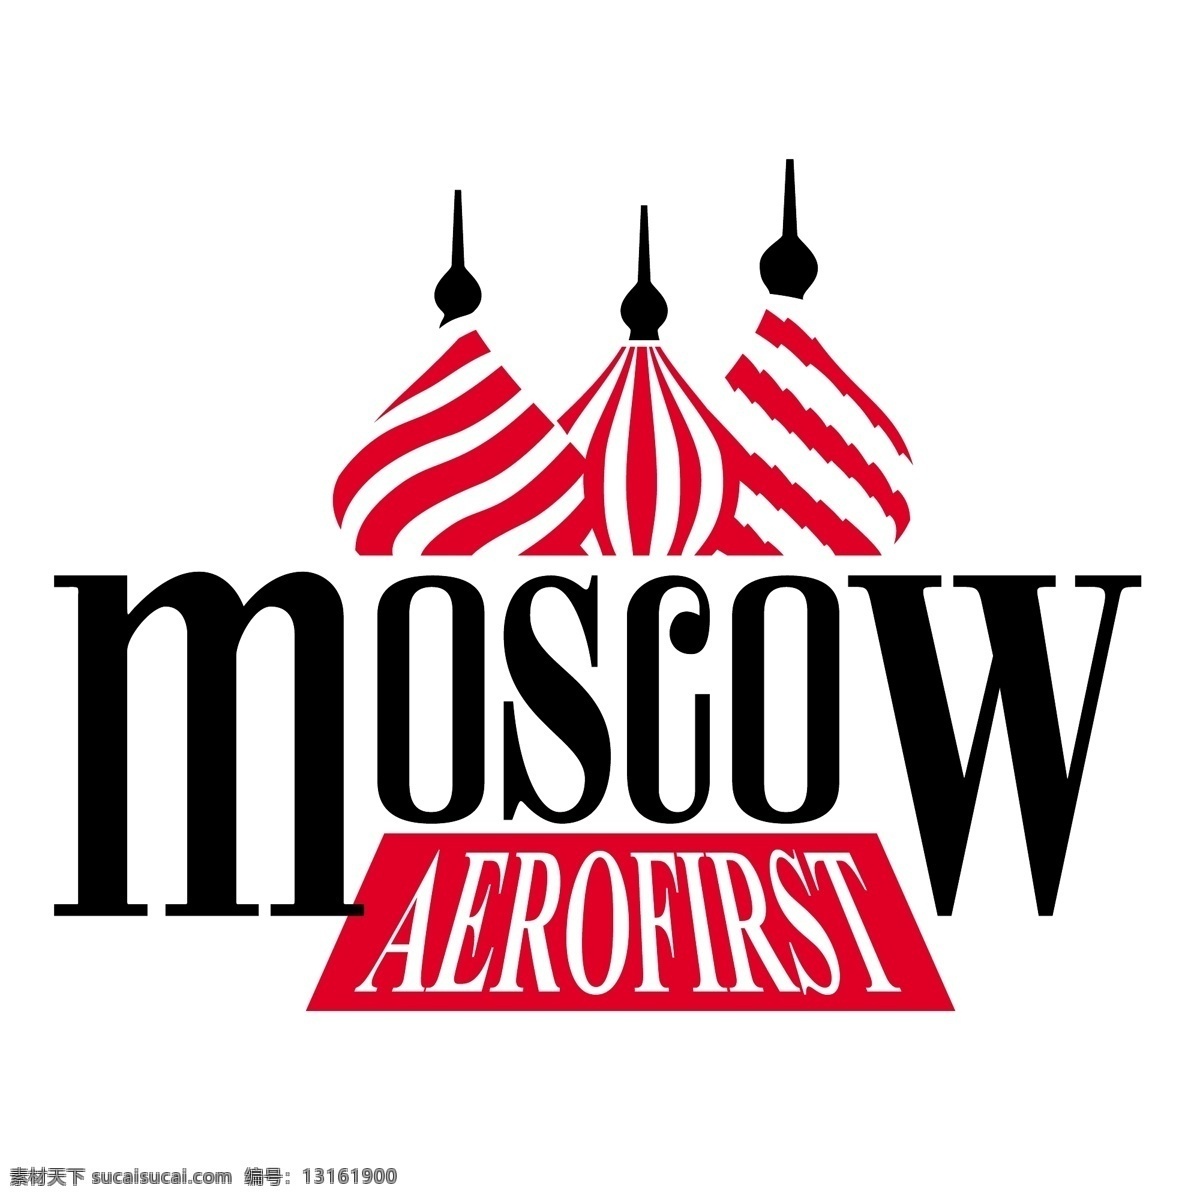 莫斯科 aerofirst 红色